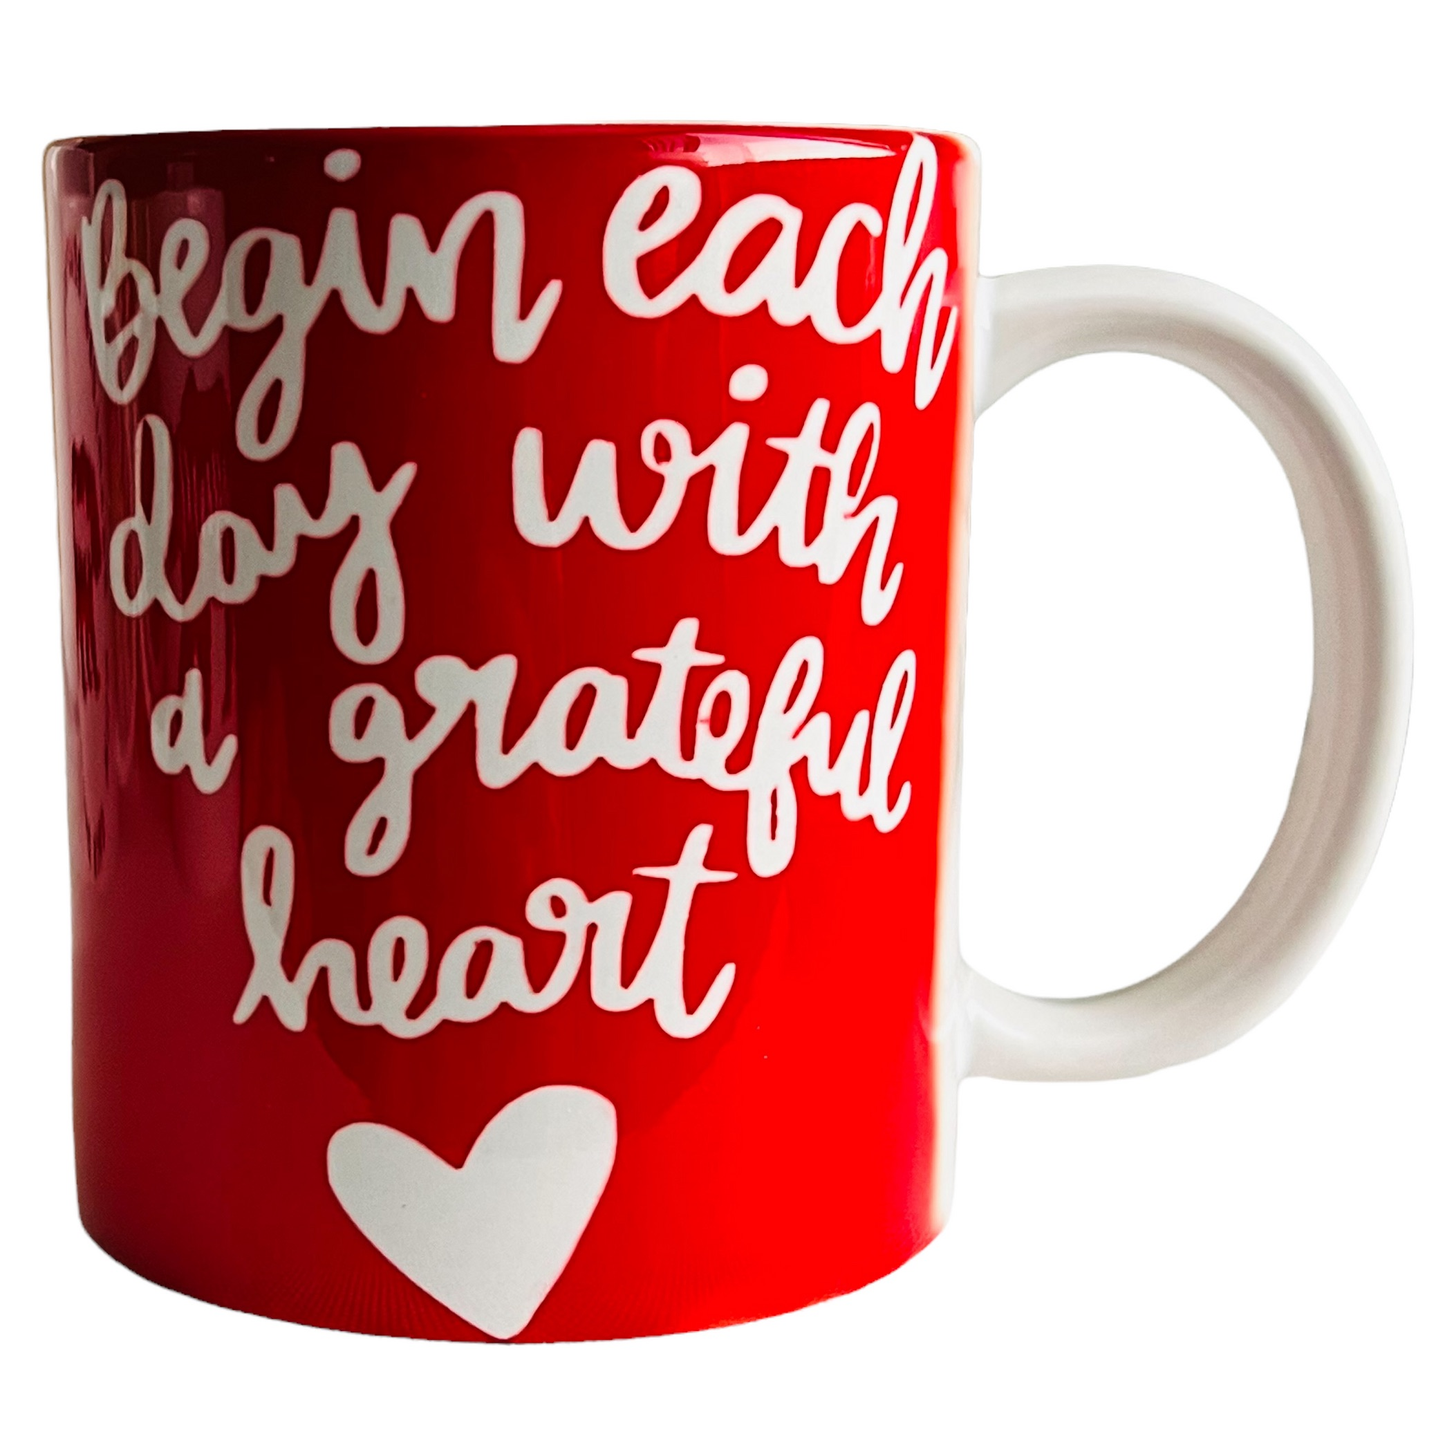 JenDore " Begin Each Day with a Grateful Heart " 12 oz. Coffee Tea Mug